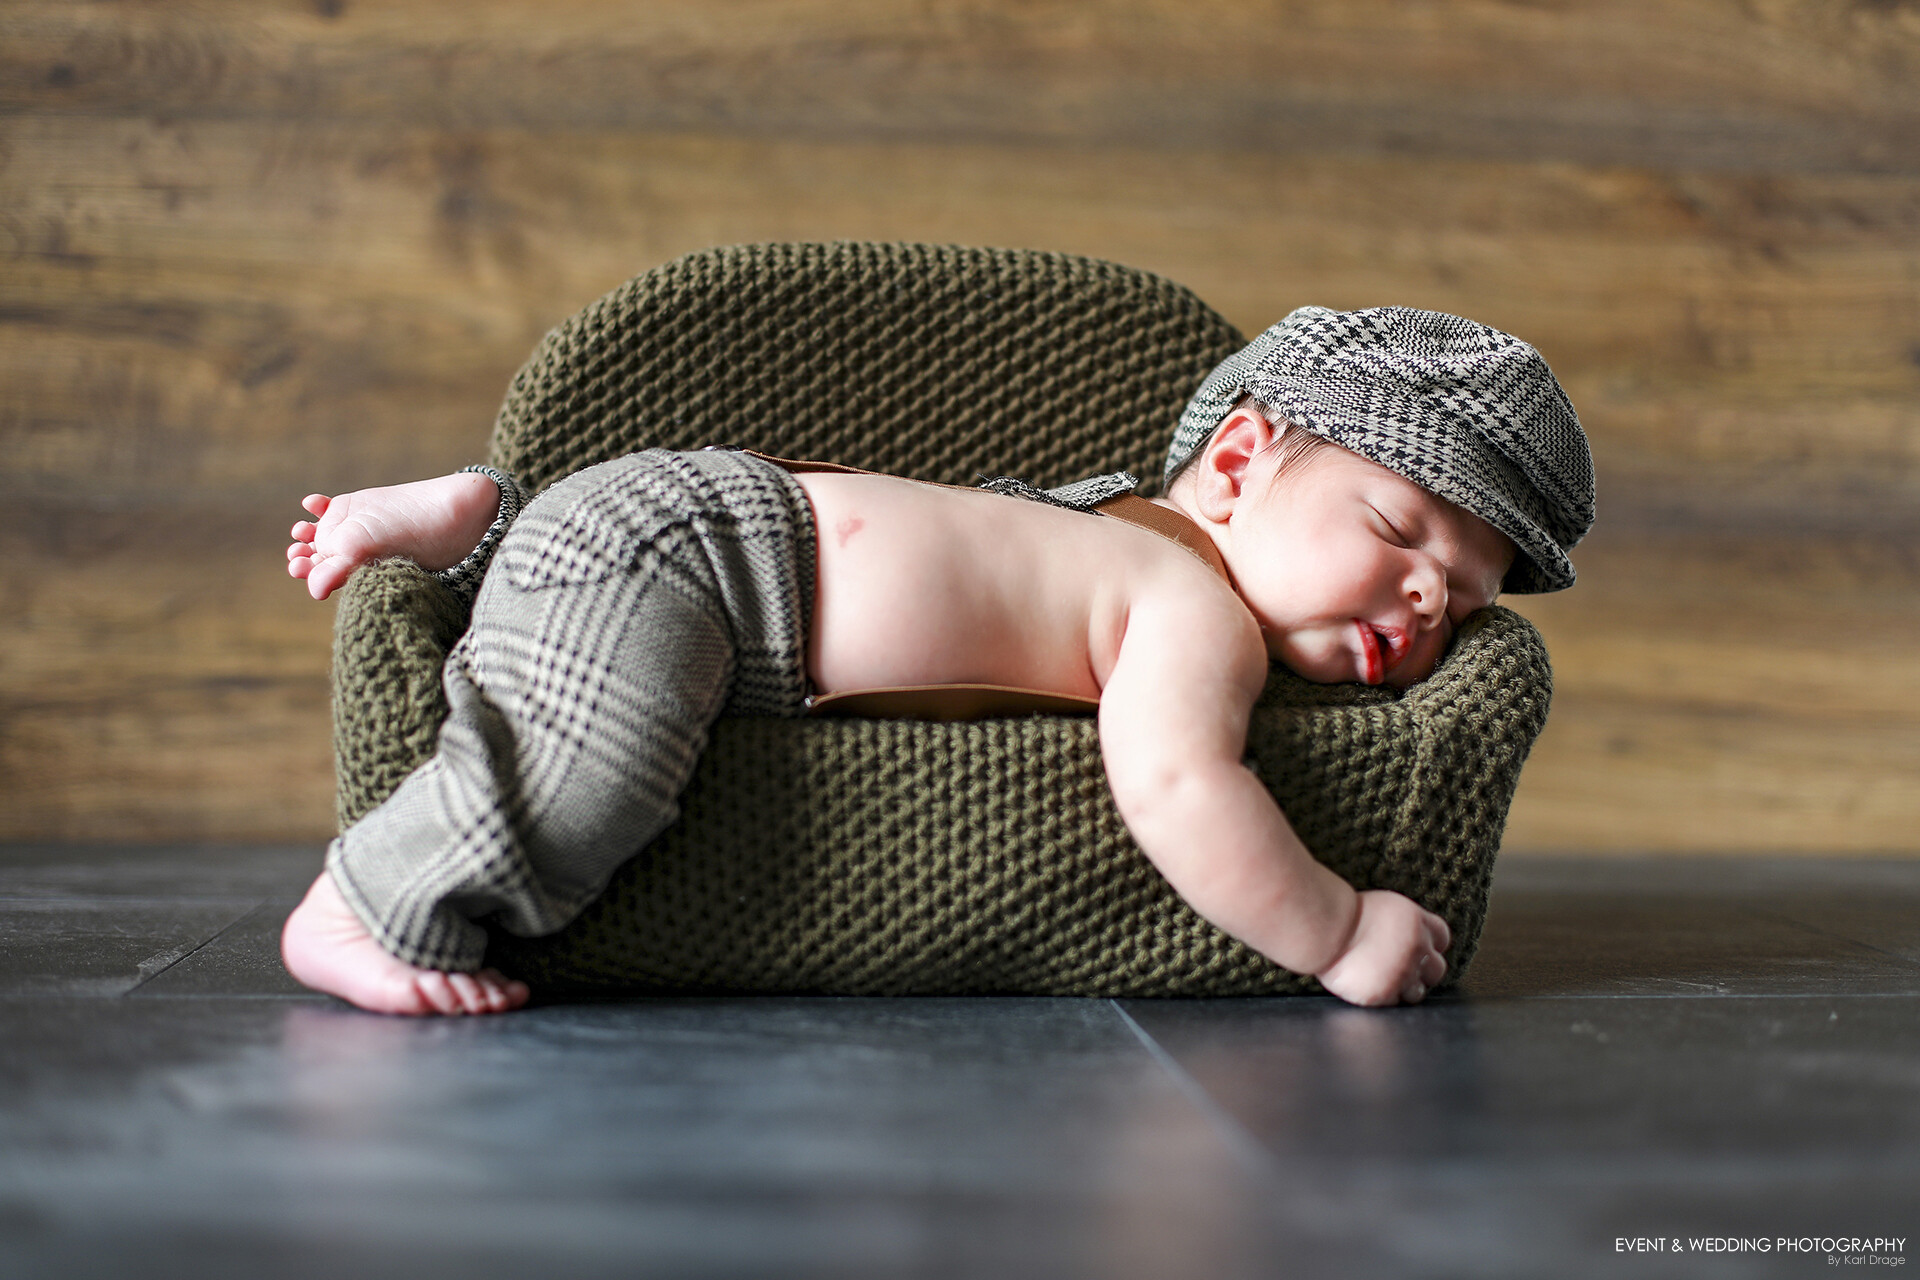 Newborn baby asleep on a sofa photo prop